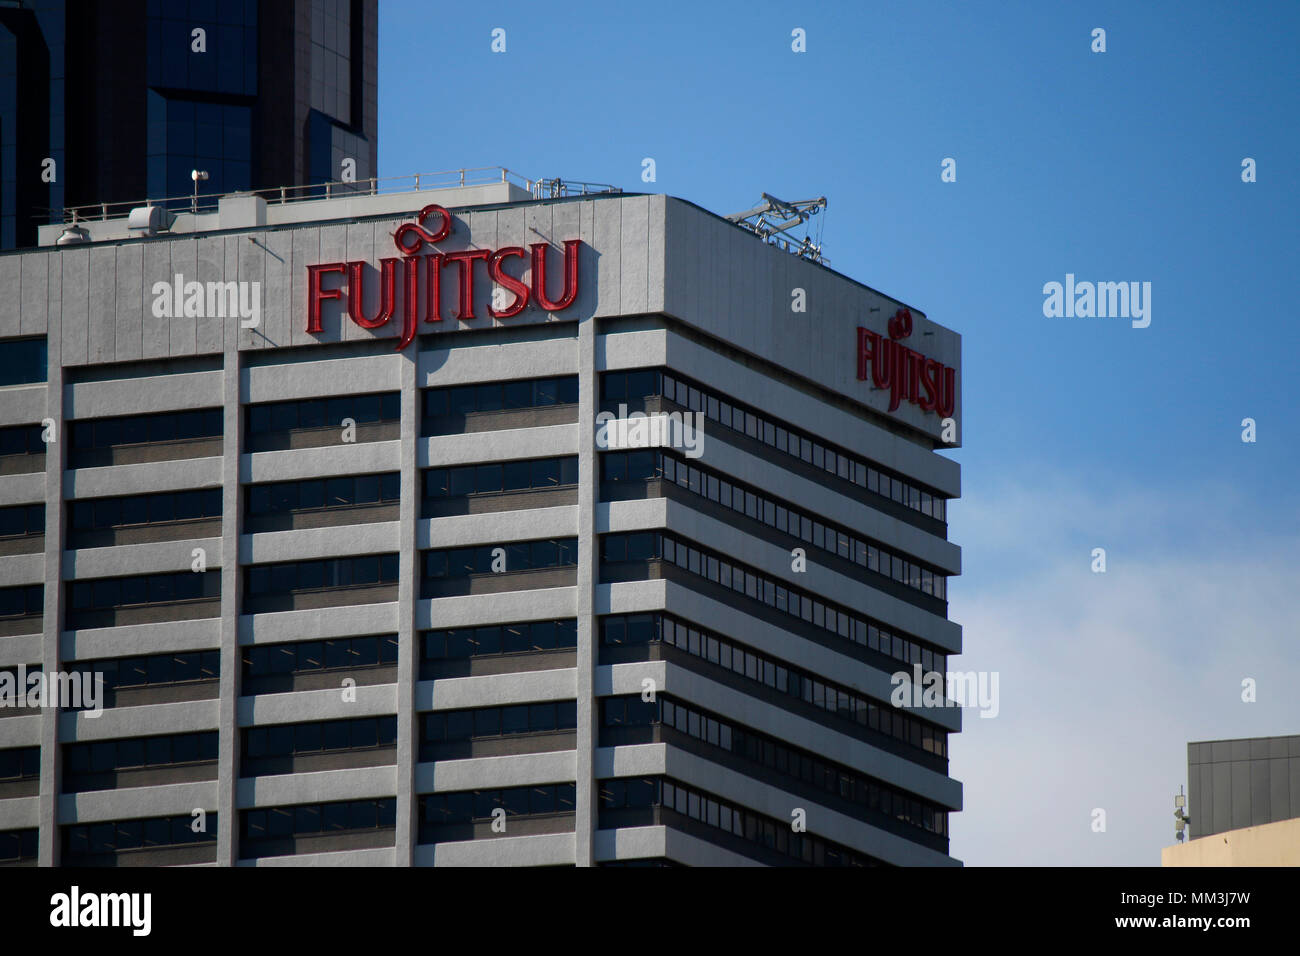 das Logo der Marke 'Fujitsu', Sydney, Australia. Stock Photo